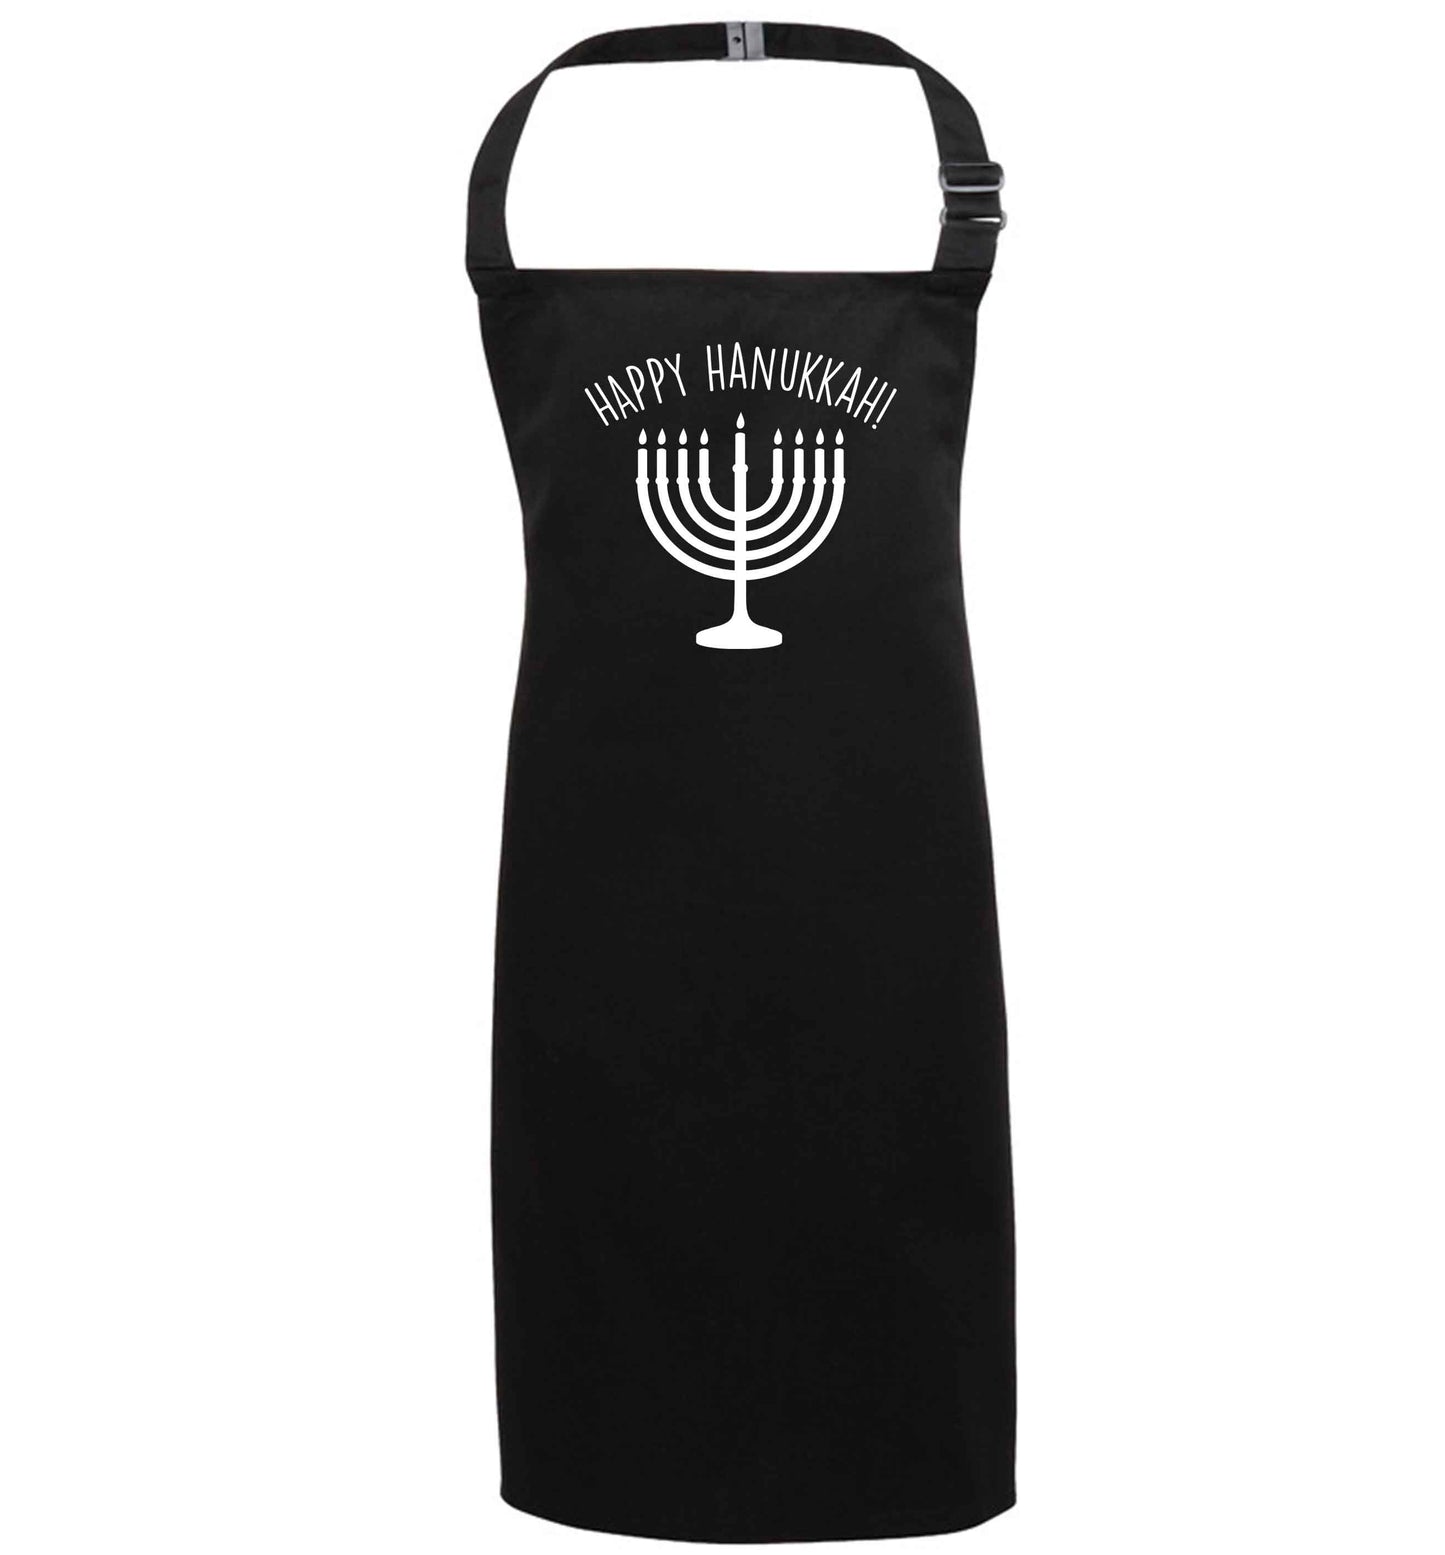 Happy hanukkah black apron 7-10 years